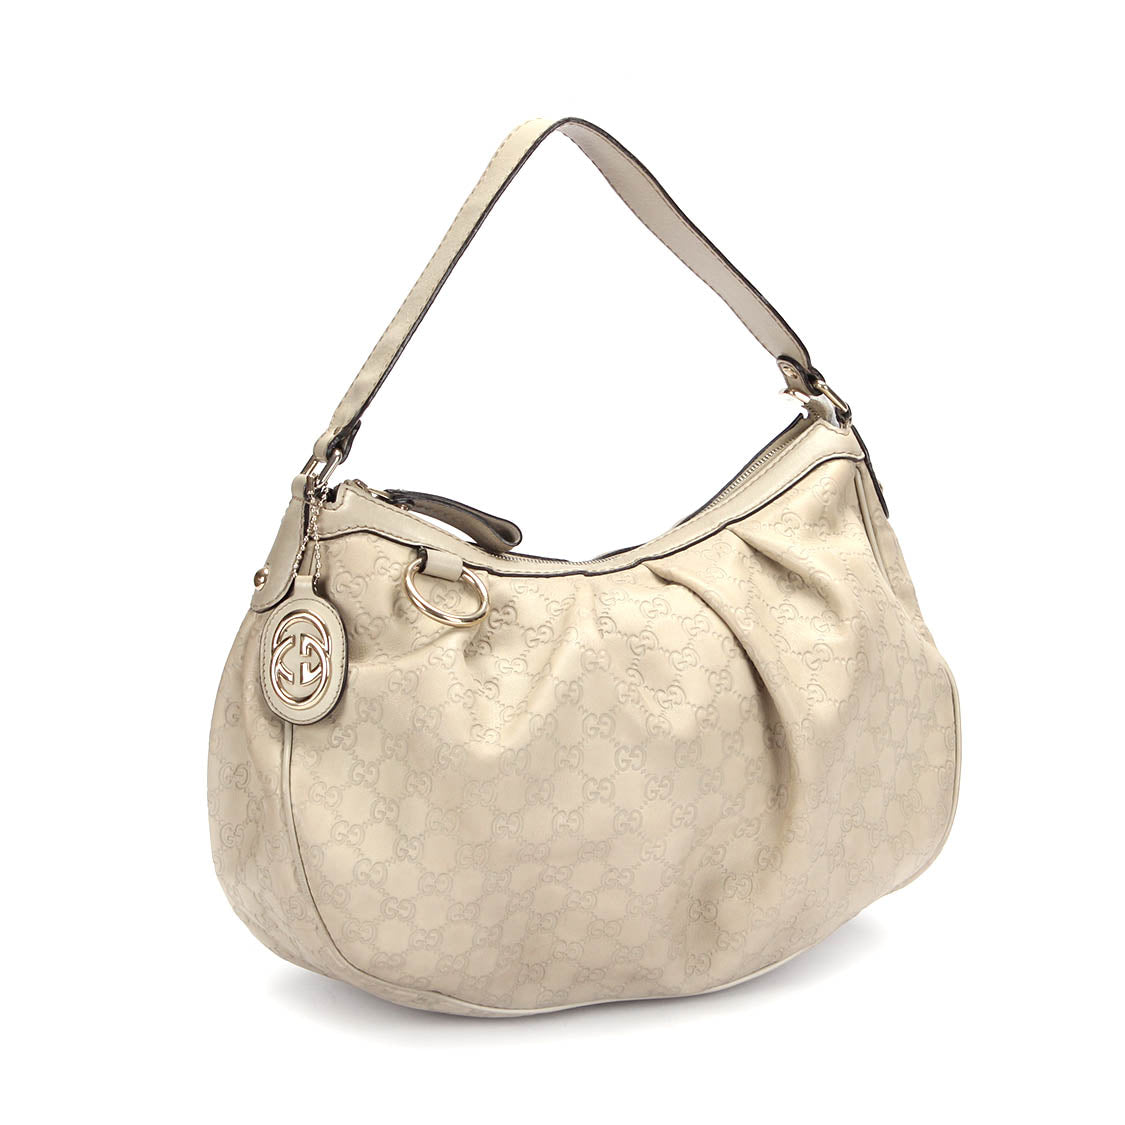 Gucci Guccissima Sukey Shoulder Bag Leather Shoulder Bag 232955 in Fair condition